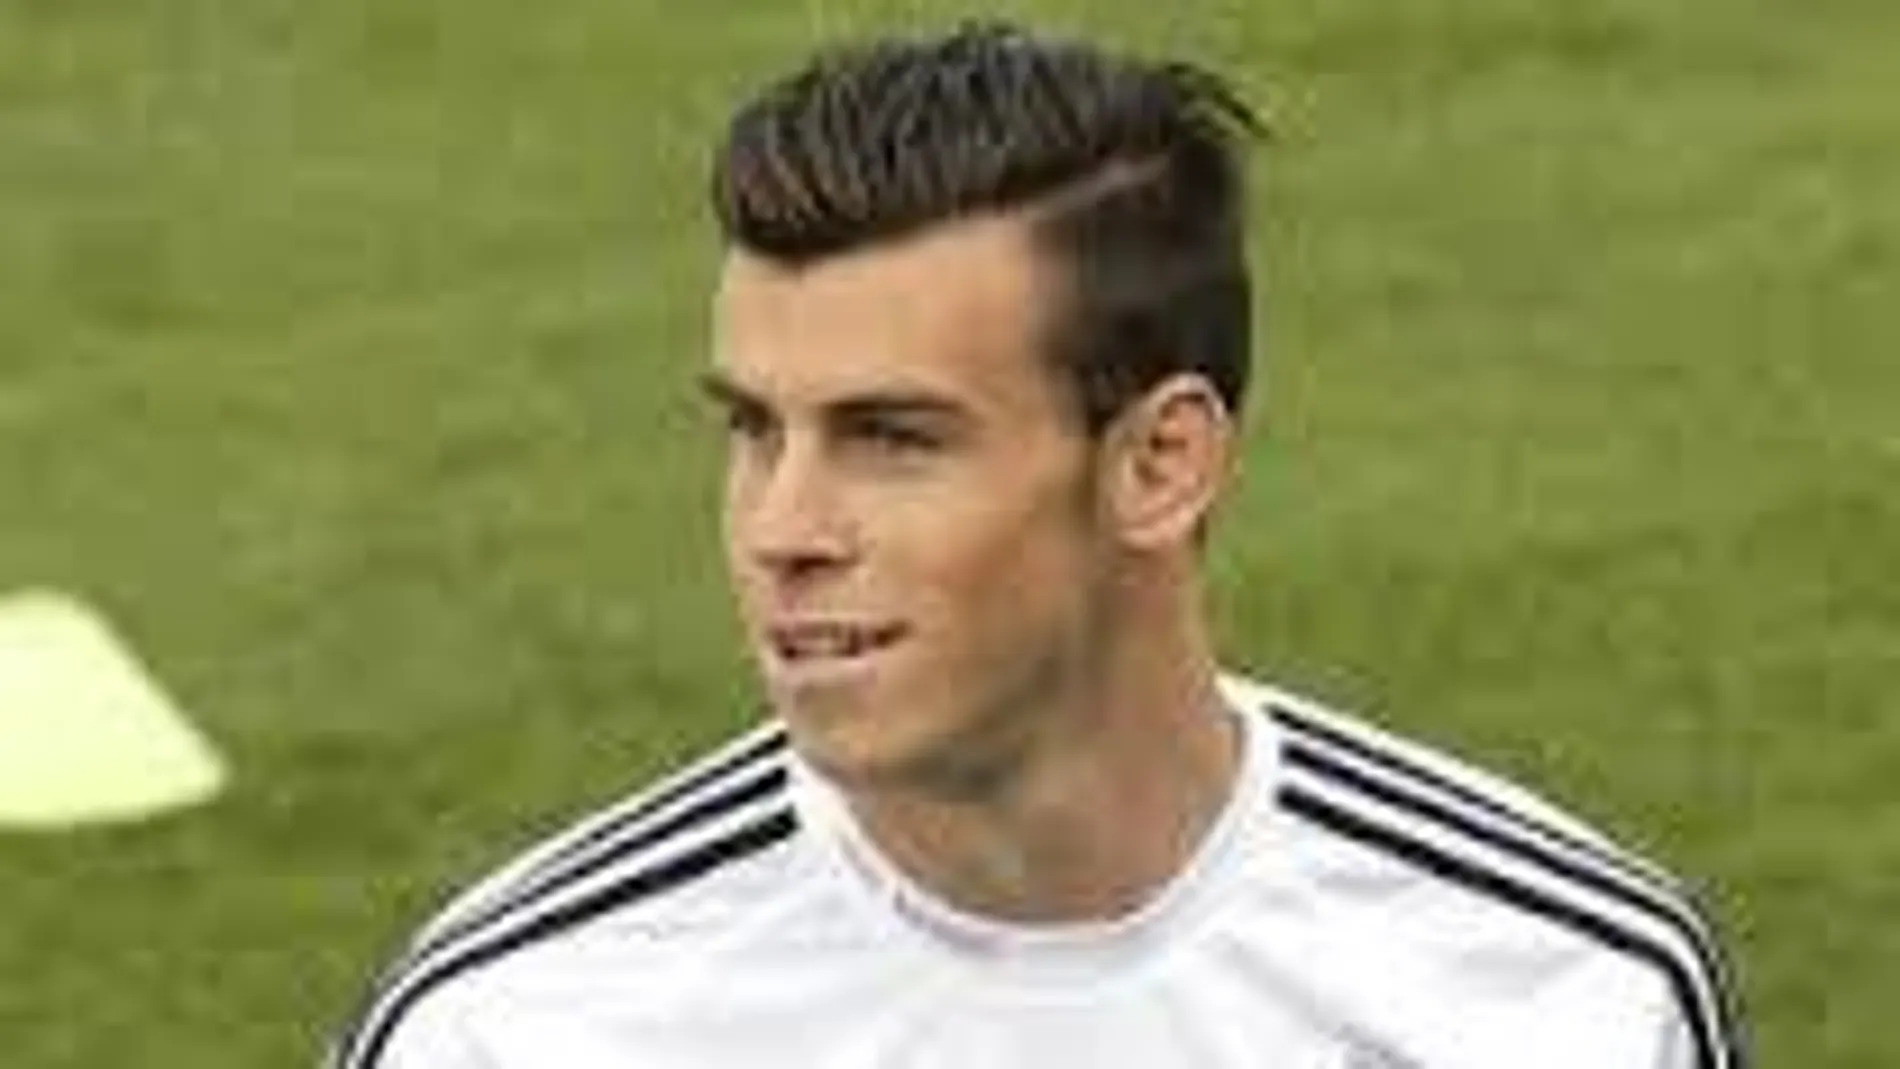 Bale ya se siente en casa